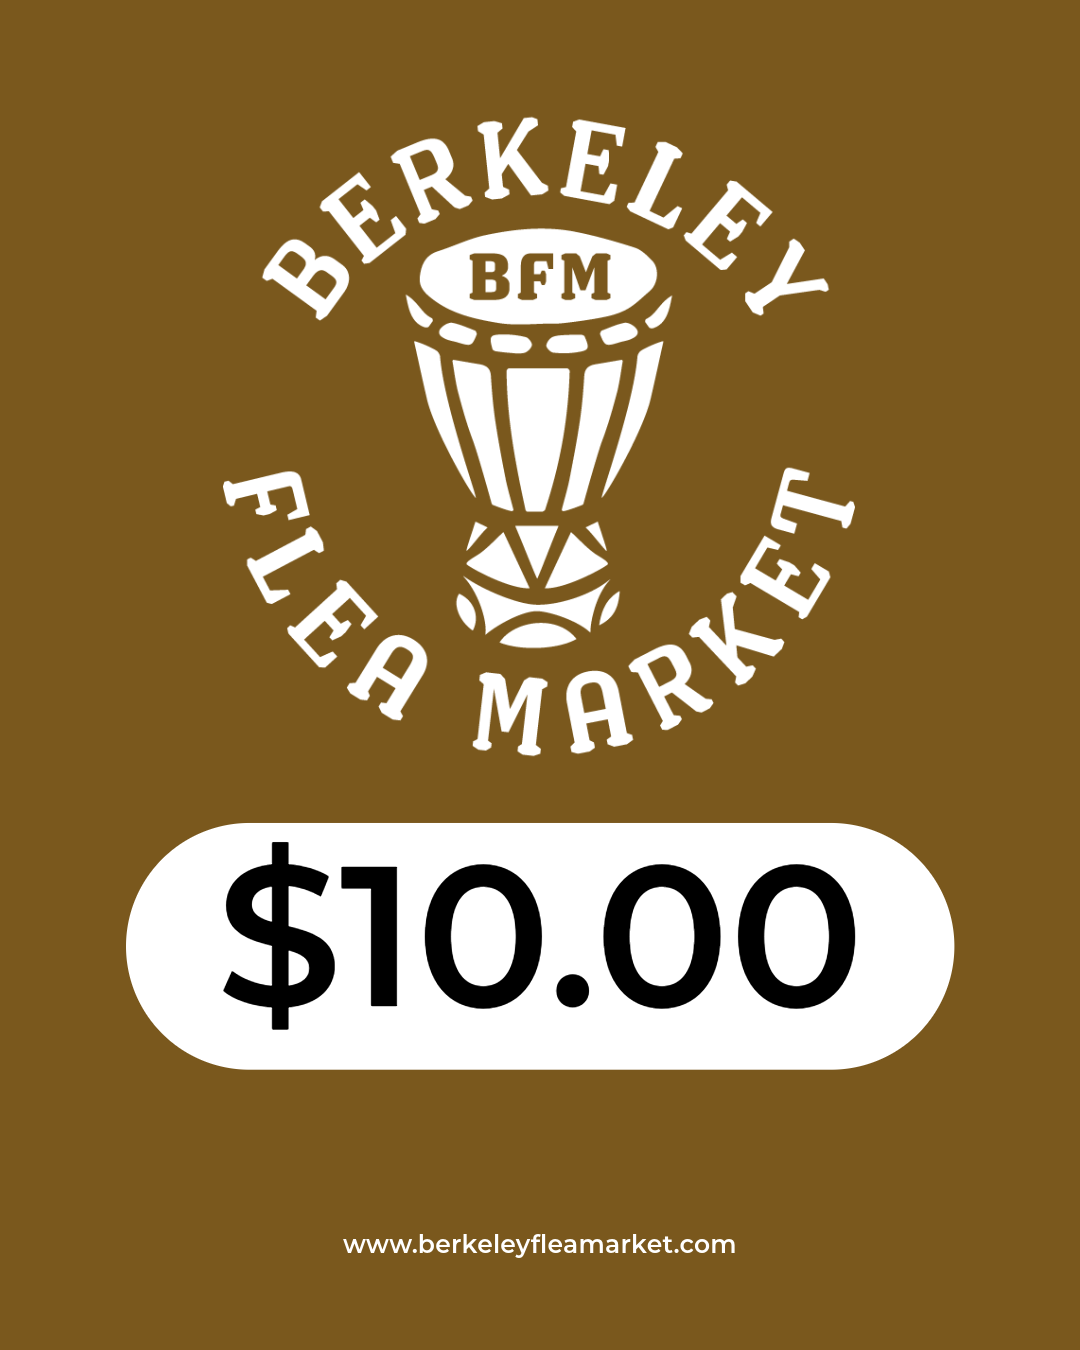 donate 10.00 to berkeley flea market